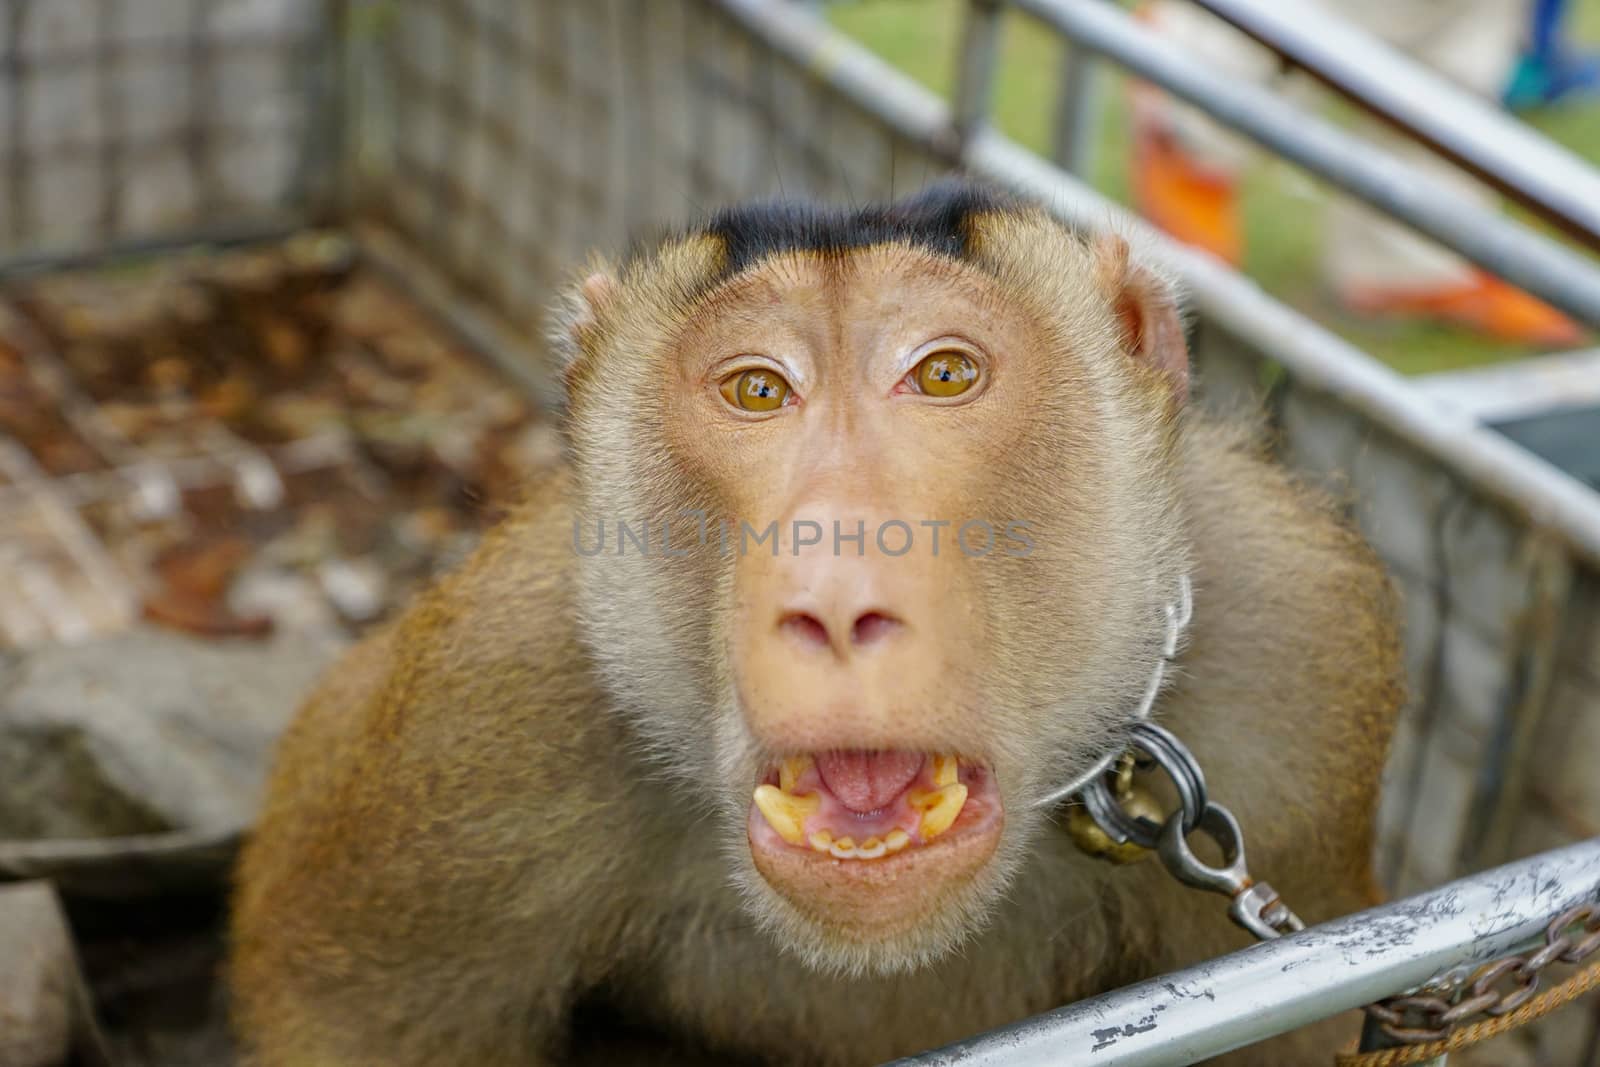 Monkey pet raised from local at Kelantan.